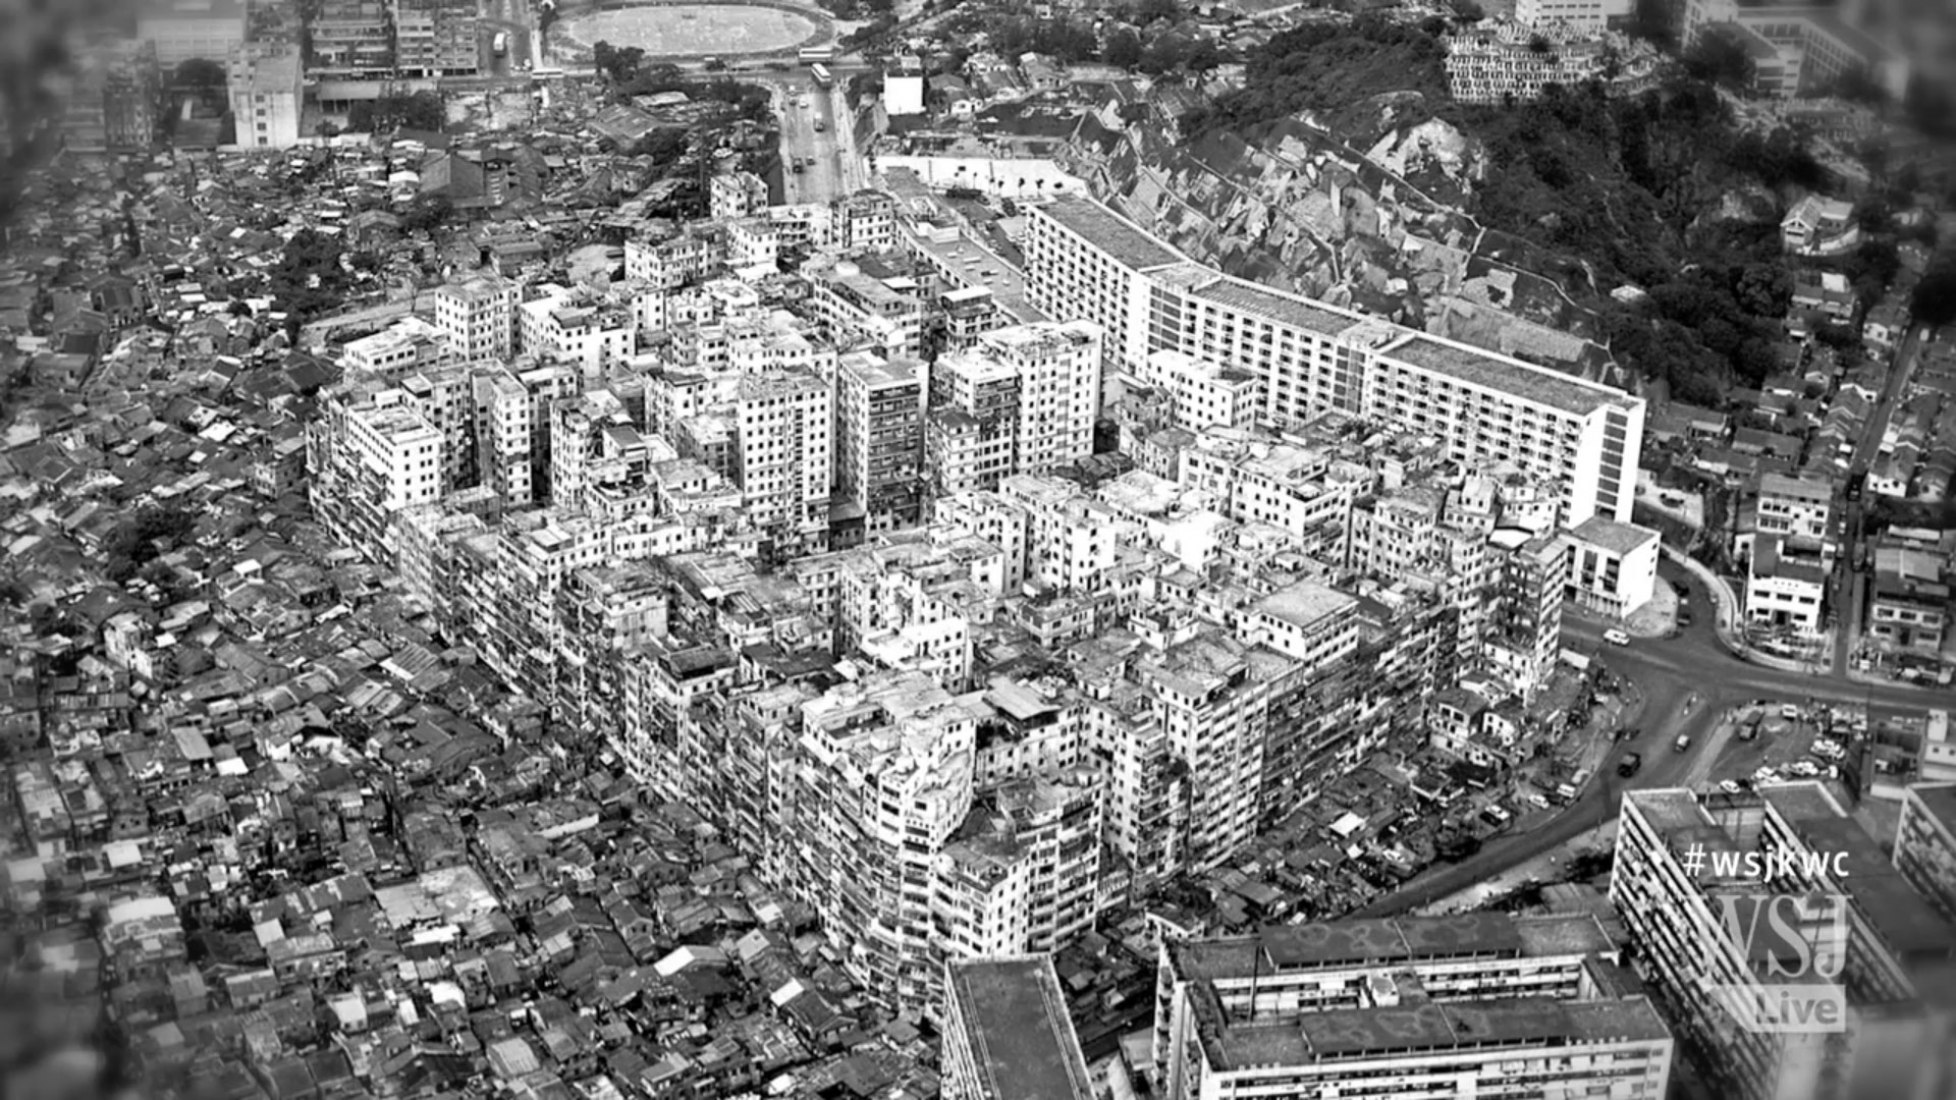 Kowloon Walled City 20 Years Later. Video screenshot.